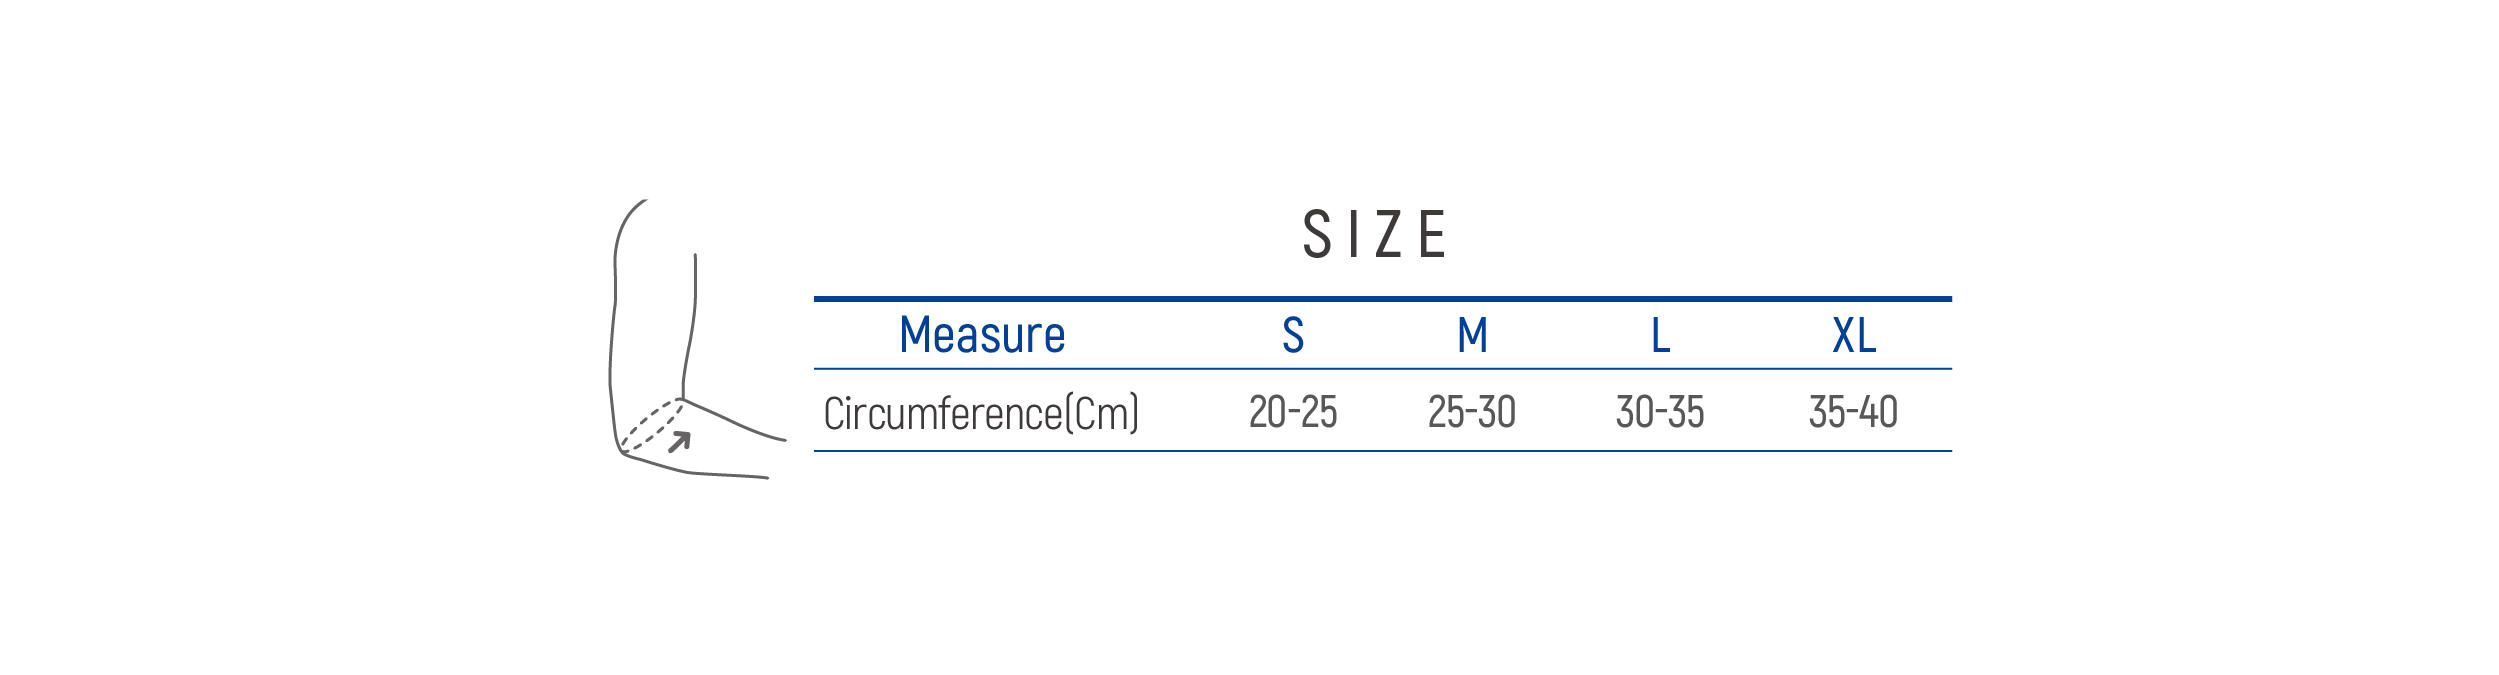 DR-E070 Size table image